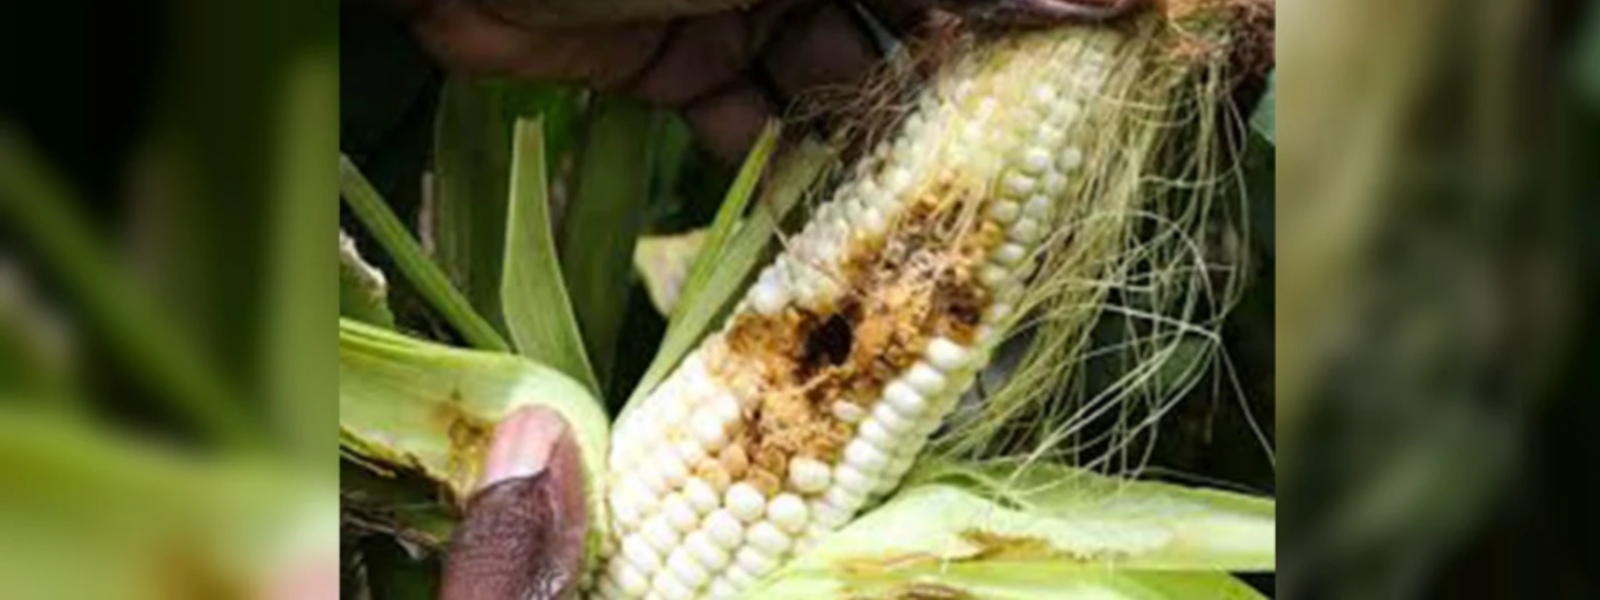 Fall armyworm attack corn fields in Badulla